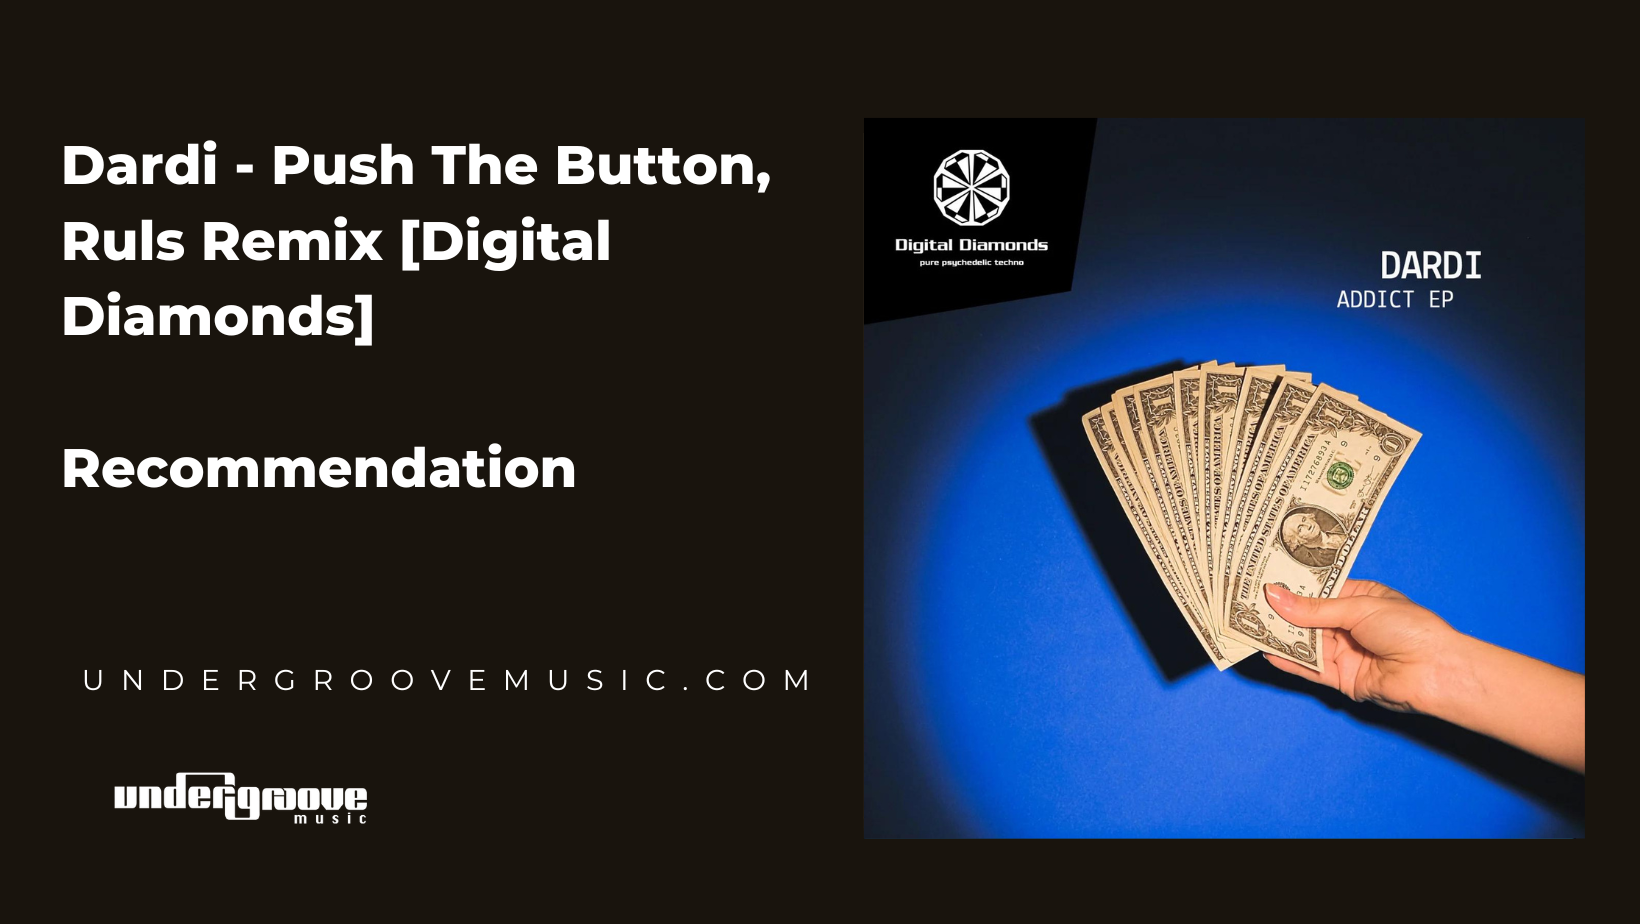 Dardi, Push The button, Ruls Remix, Digital Diamonds